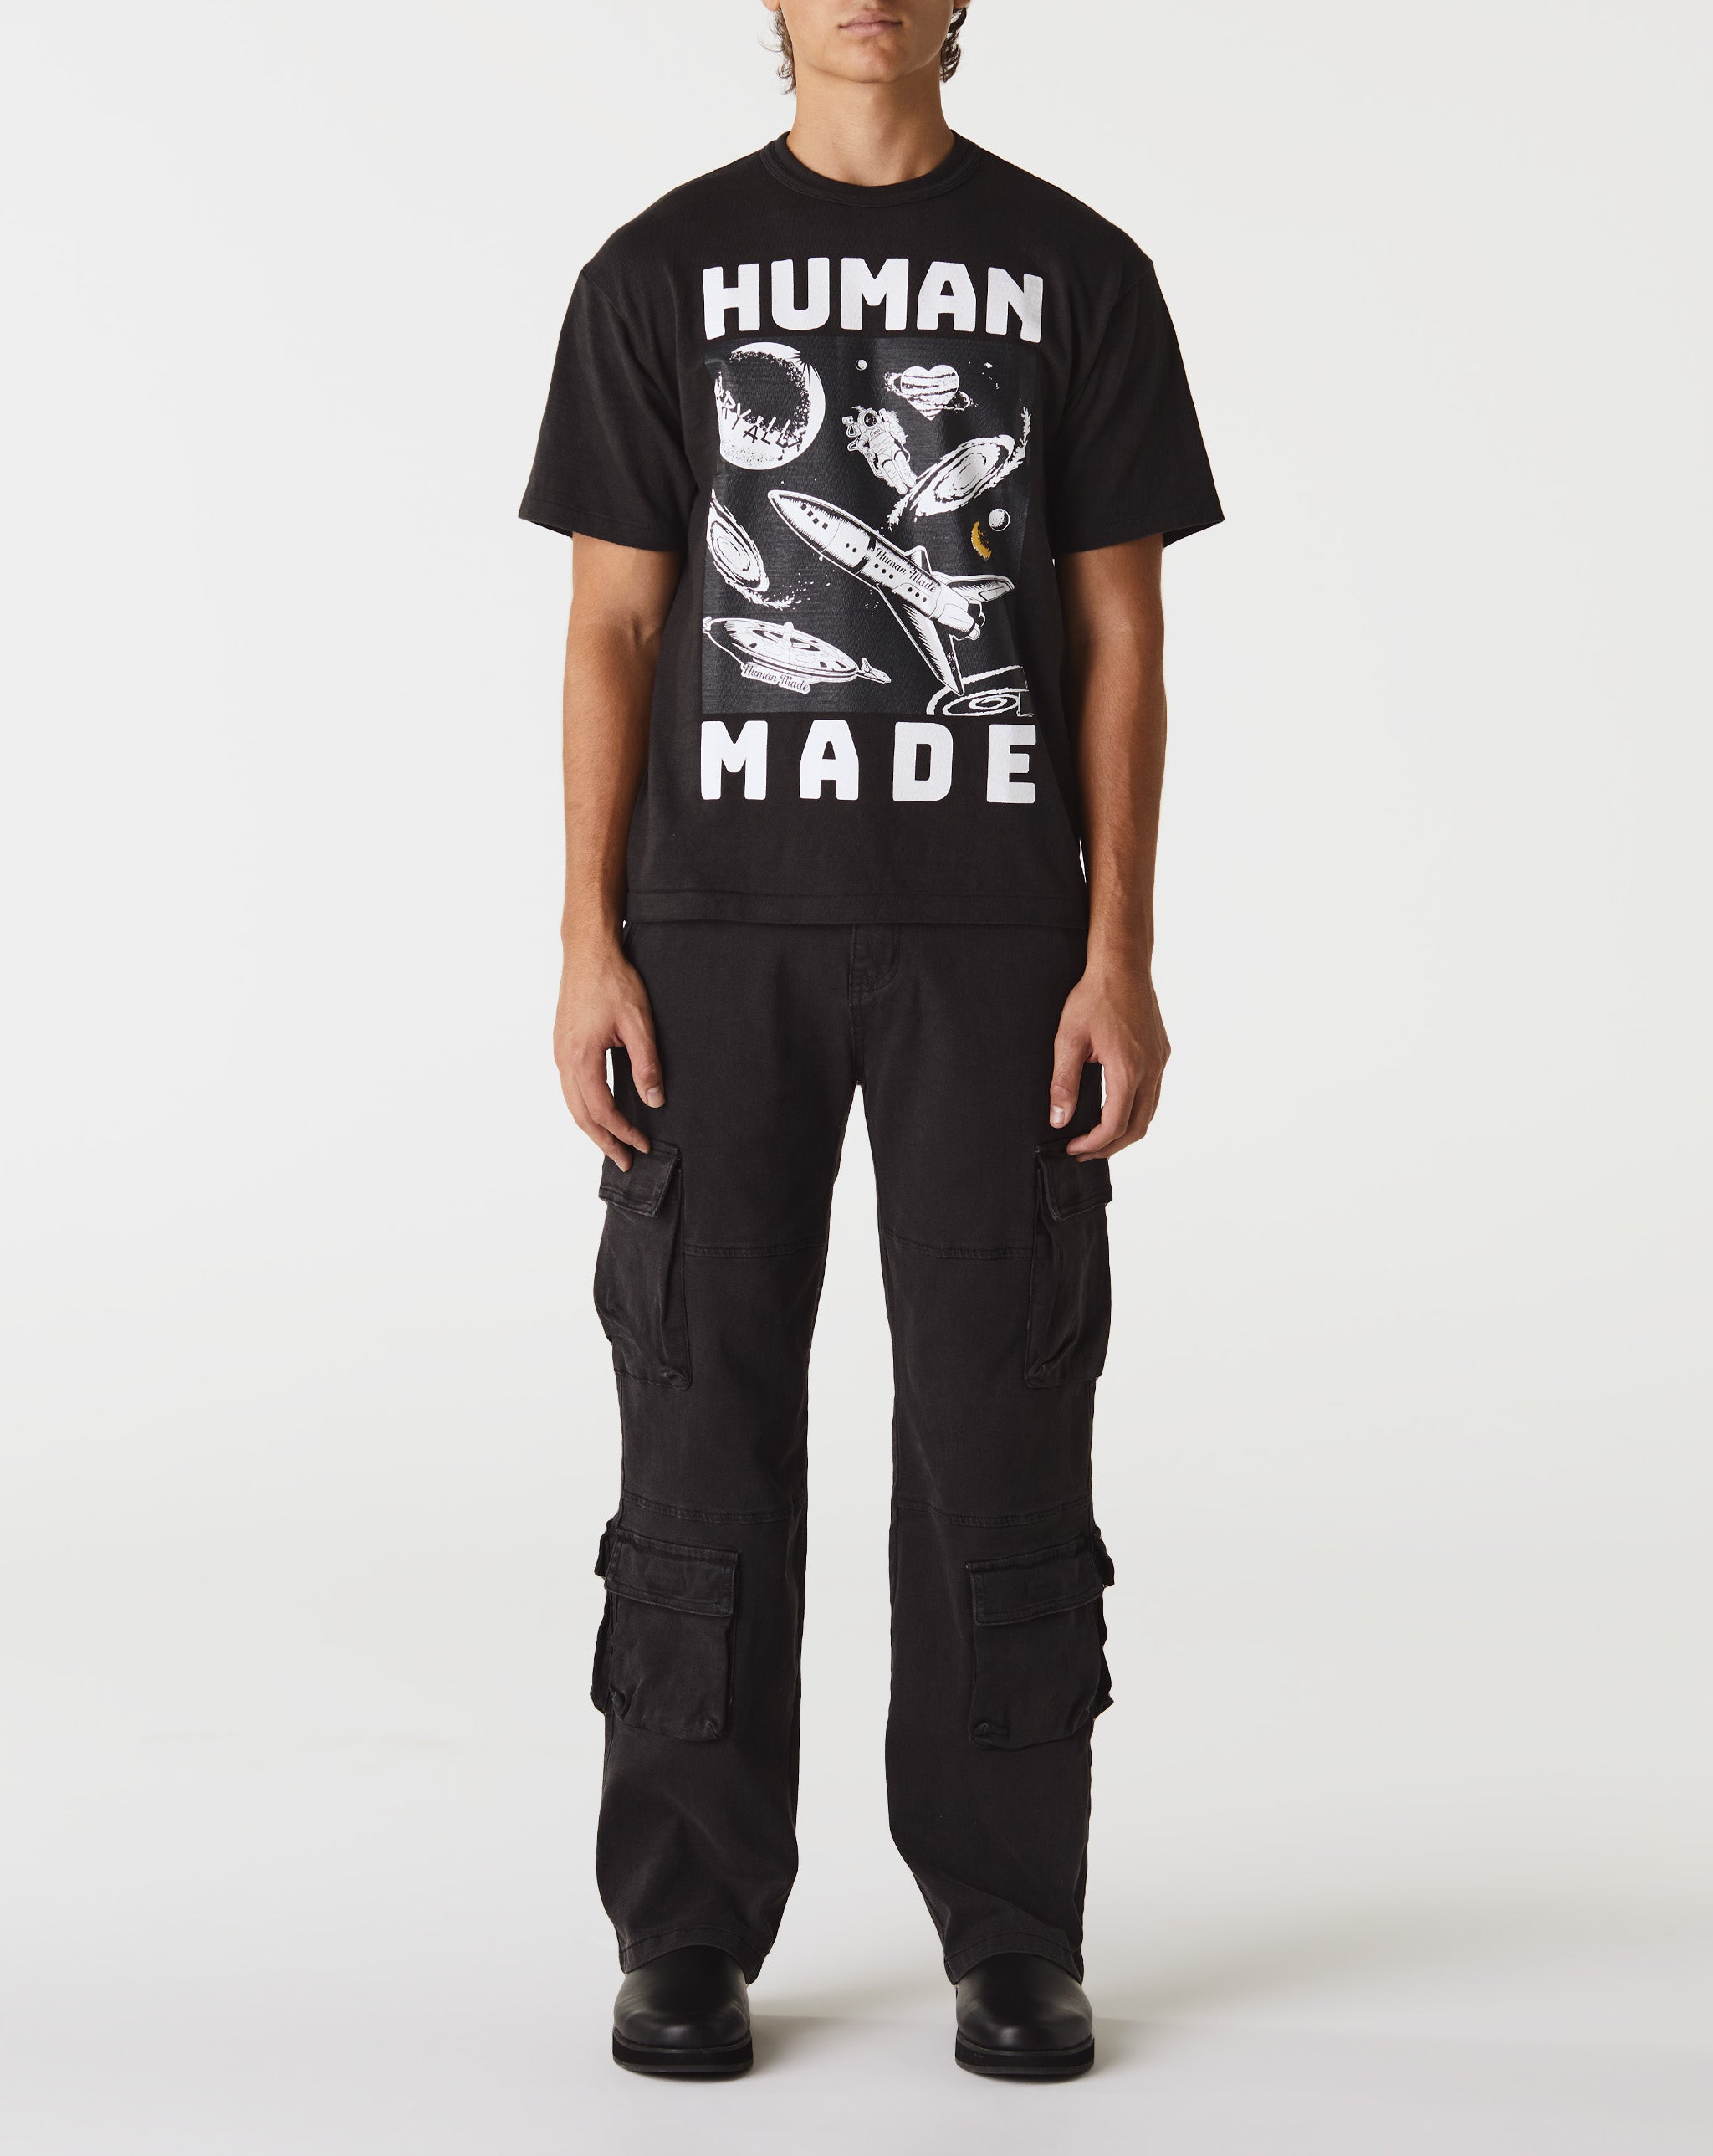 Human Made Graphic T-Shirt #14  - Cheap Cerbe Jordan outlet